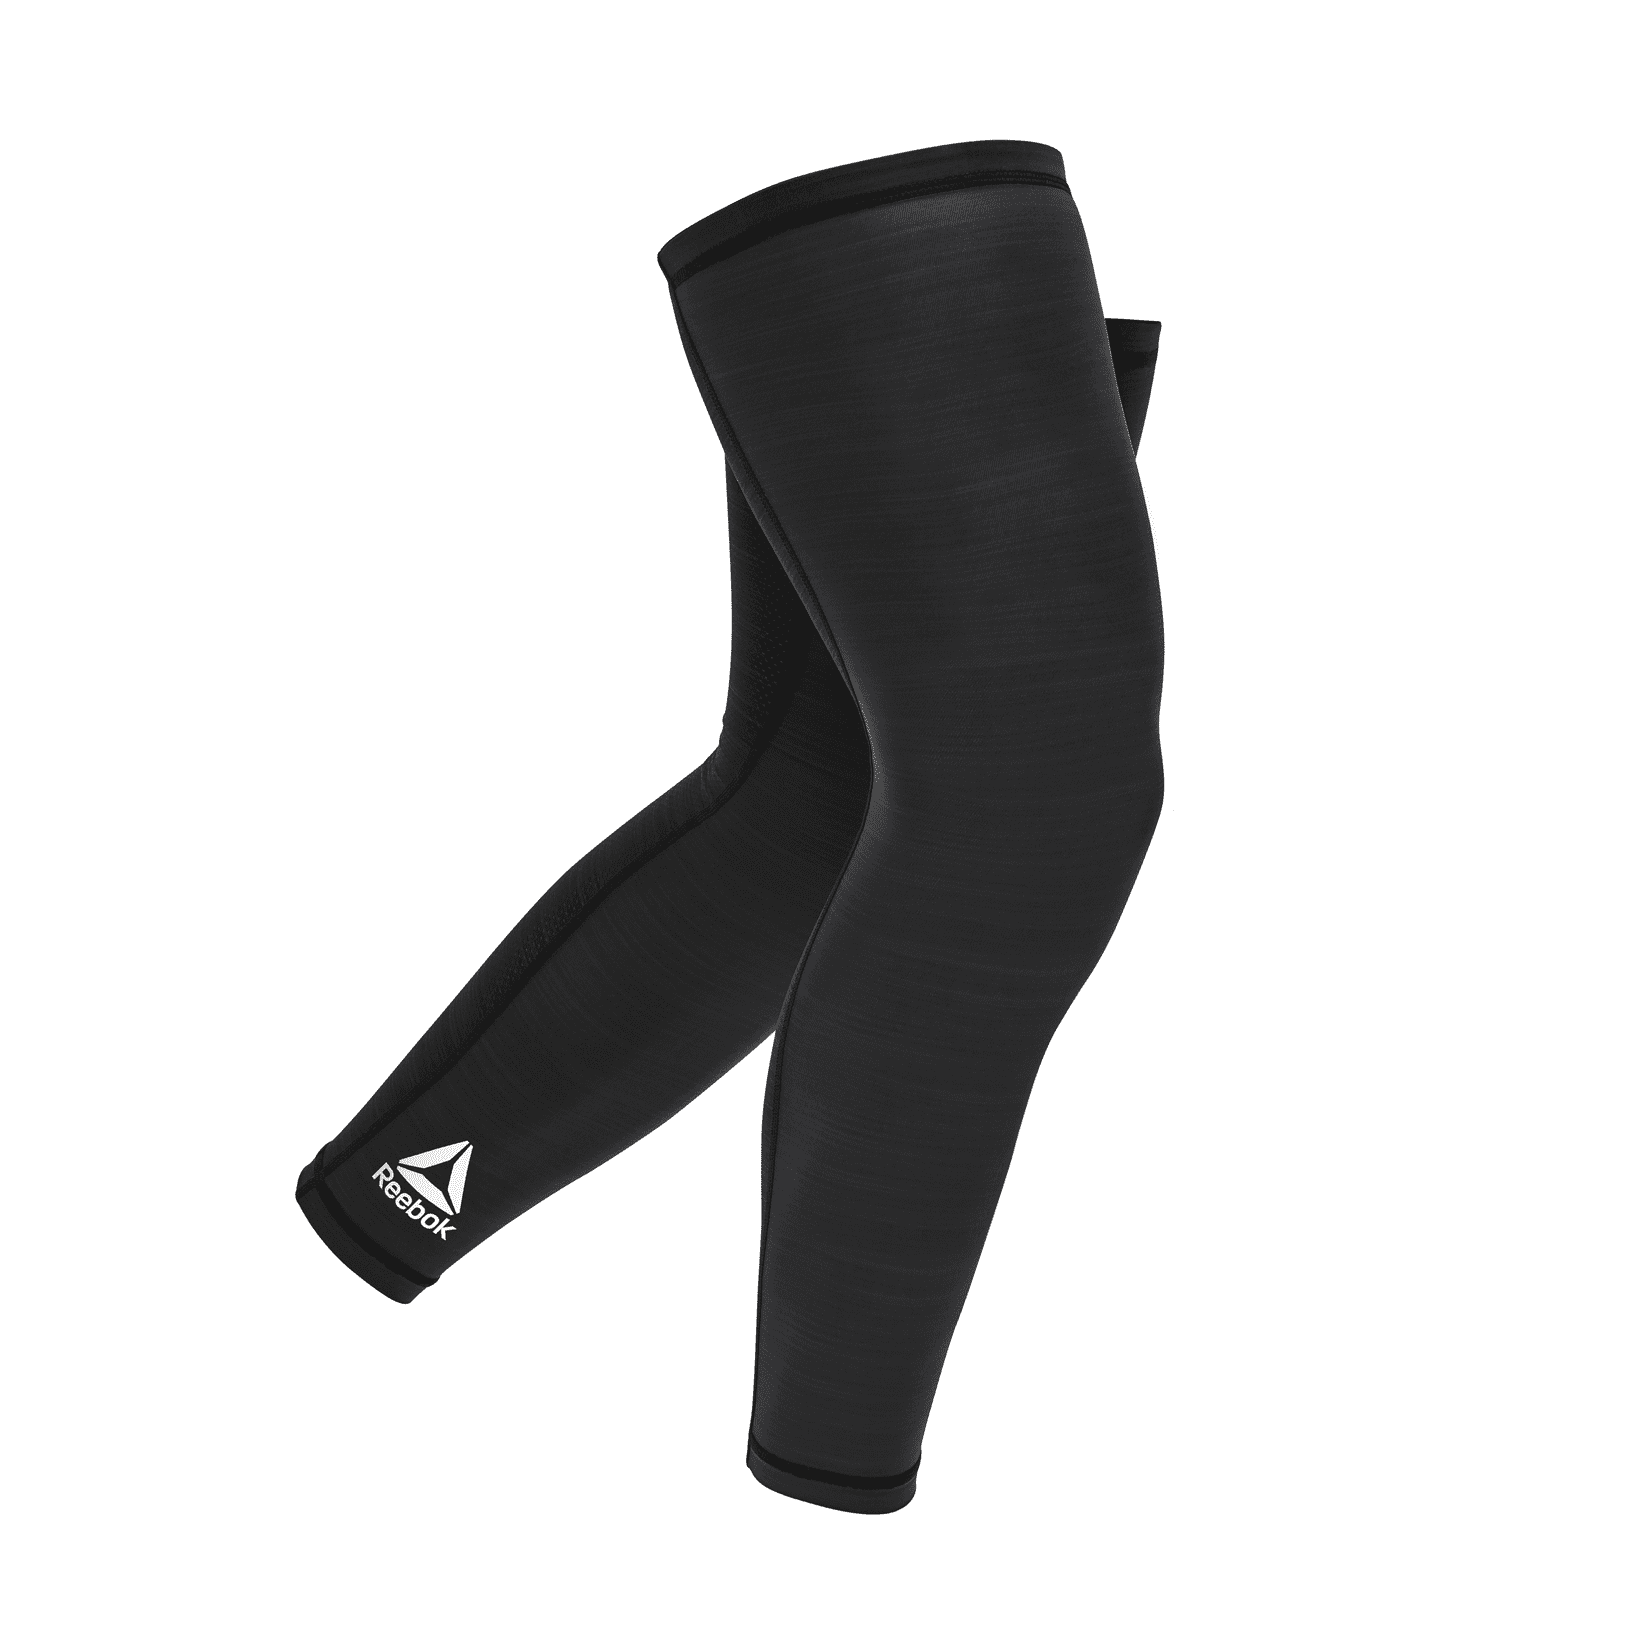 Reebok Activchill Compression Leg Sleeves, Small/Medium, Black, Pair